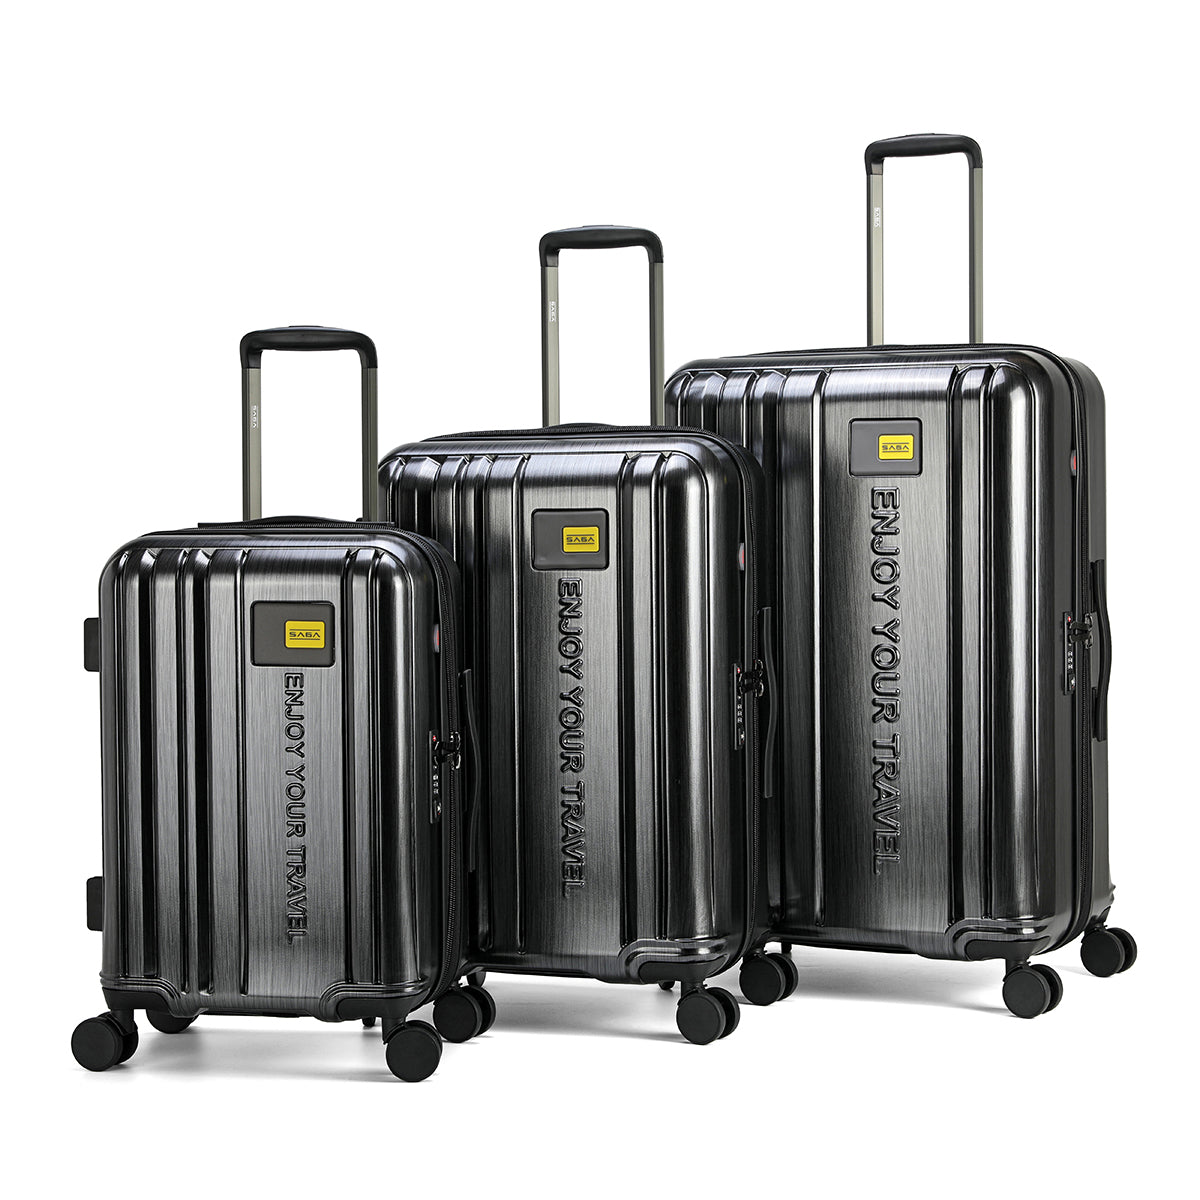 Polycarbonate travel bags, bold design, several sizes, black color